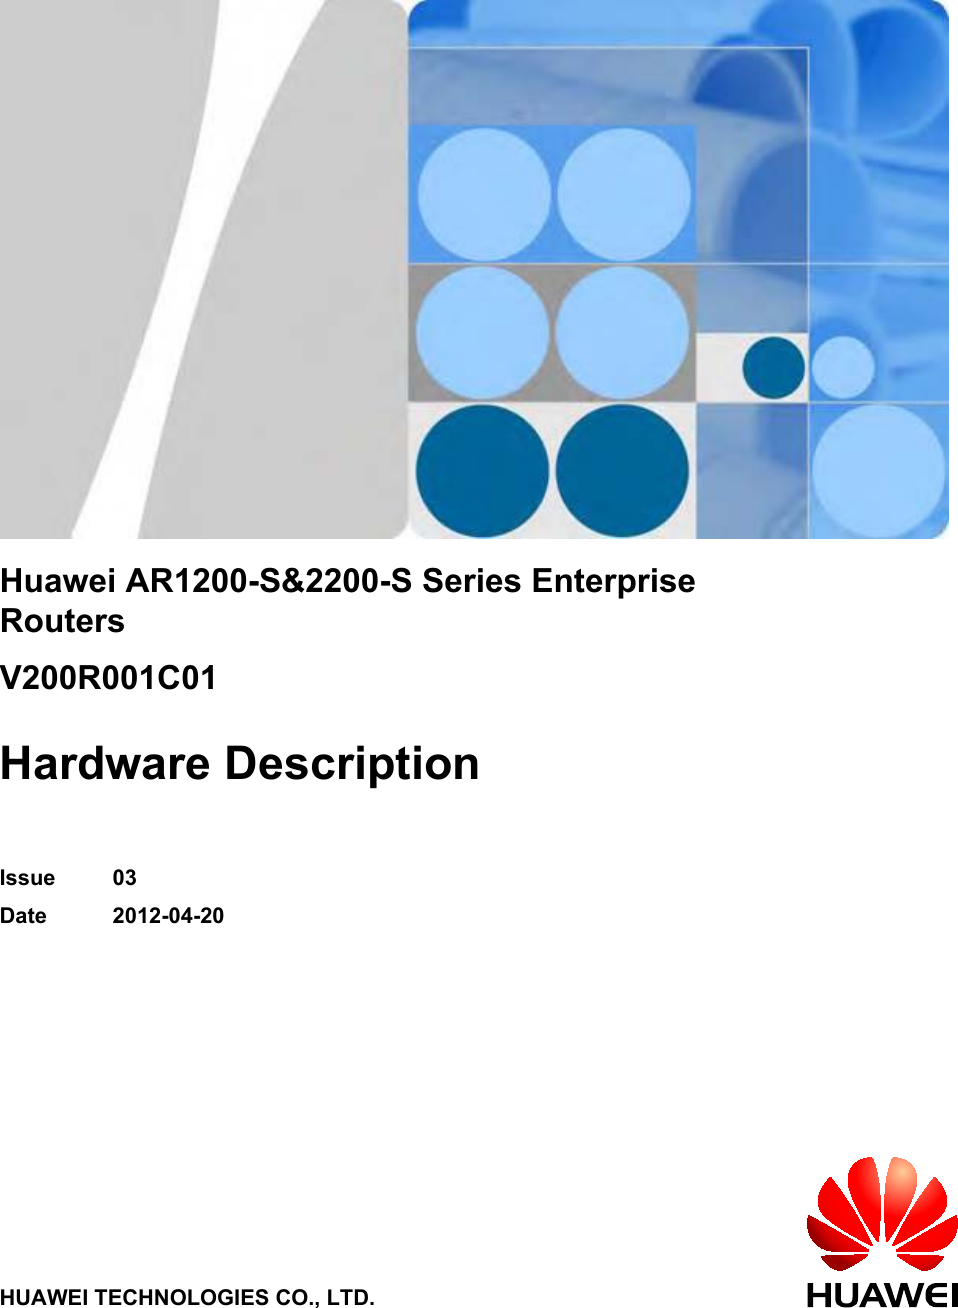 Huawei AR1200-S&amp;2200-S Series EnterpriseRoutersV200R001C01Hardware DescriptionIssue 03Date 2012-04-20HUAWEI TECHNOLOGIES CO., LTD.